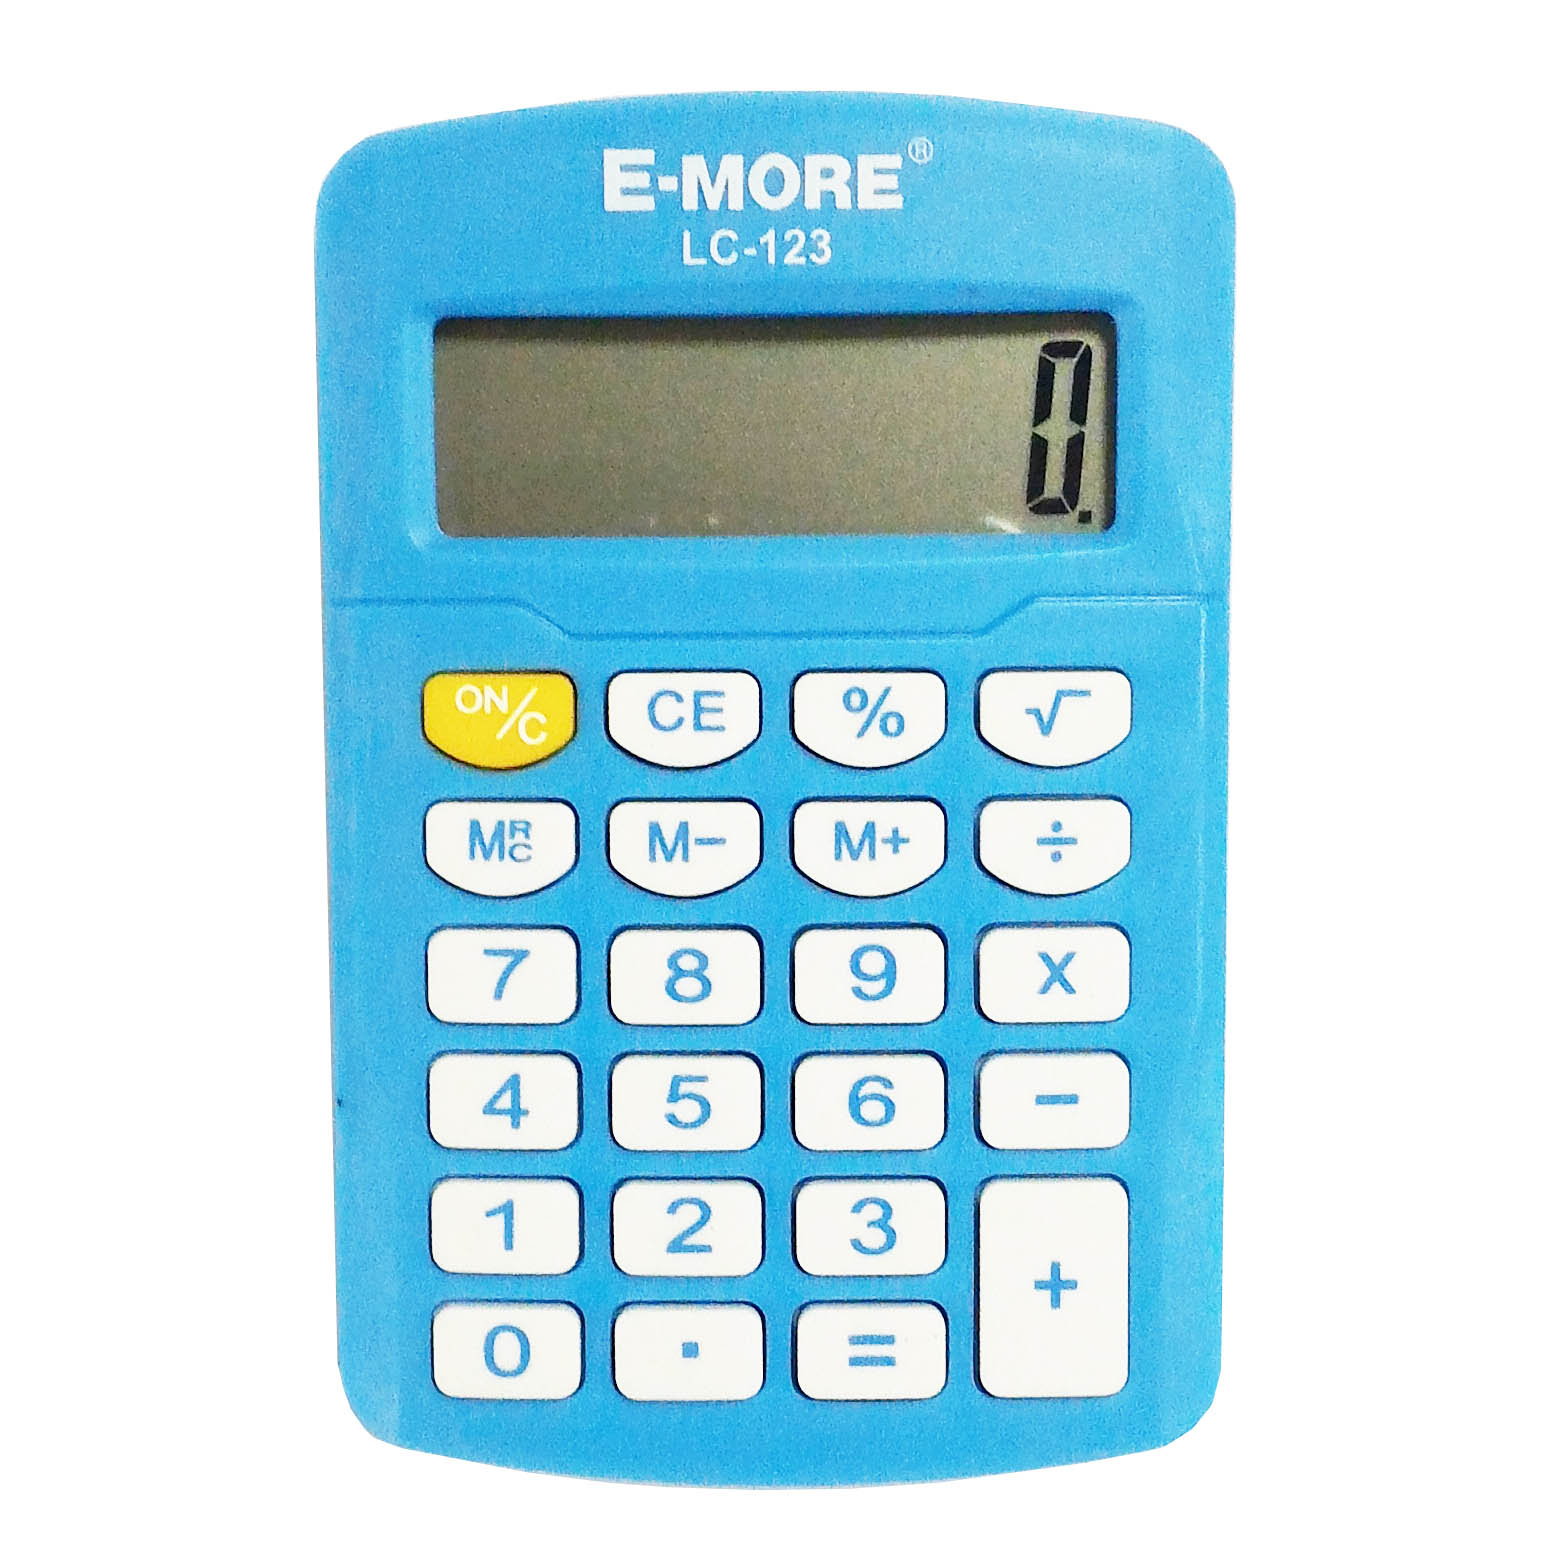 【文具通】E-MORE LC-123 計算機 8位 L5140228